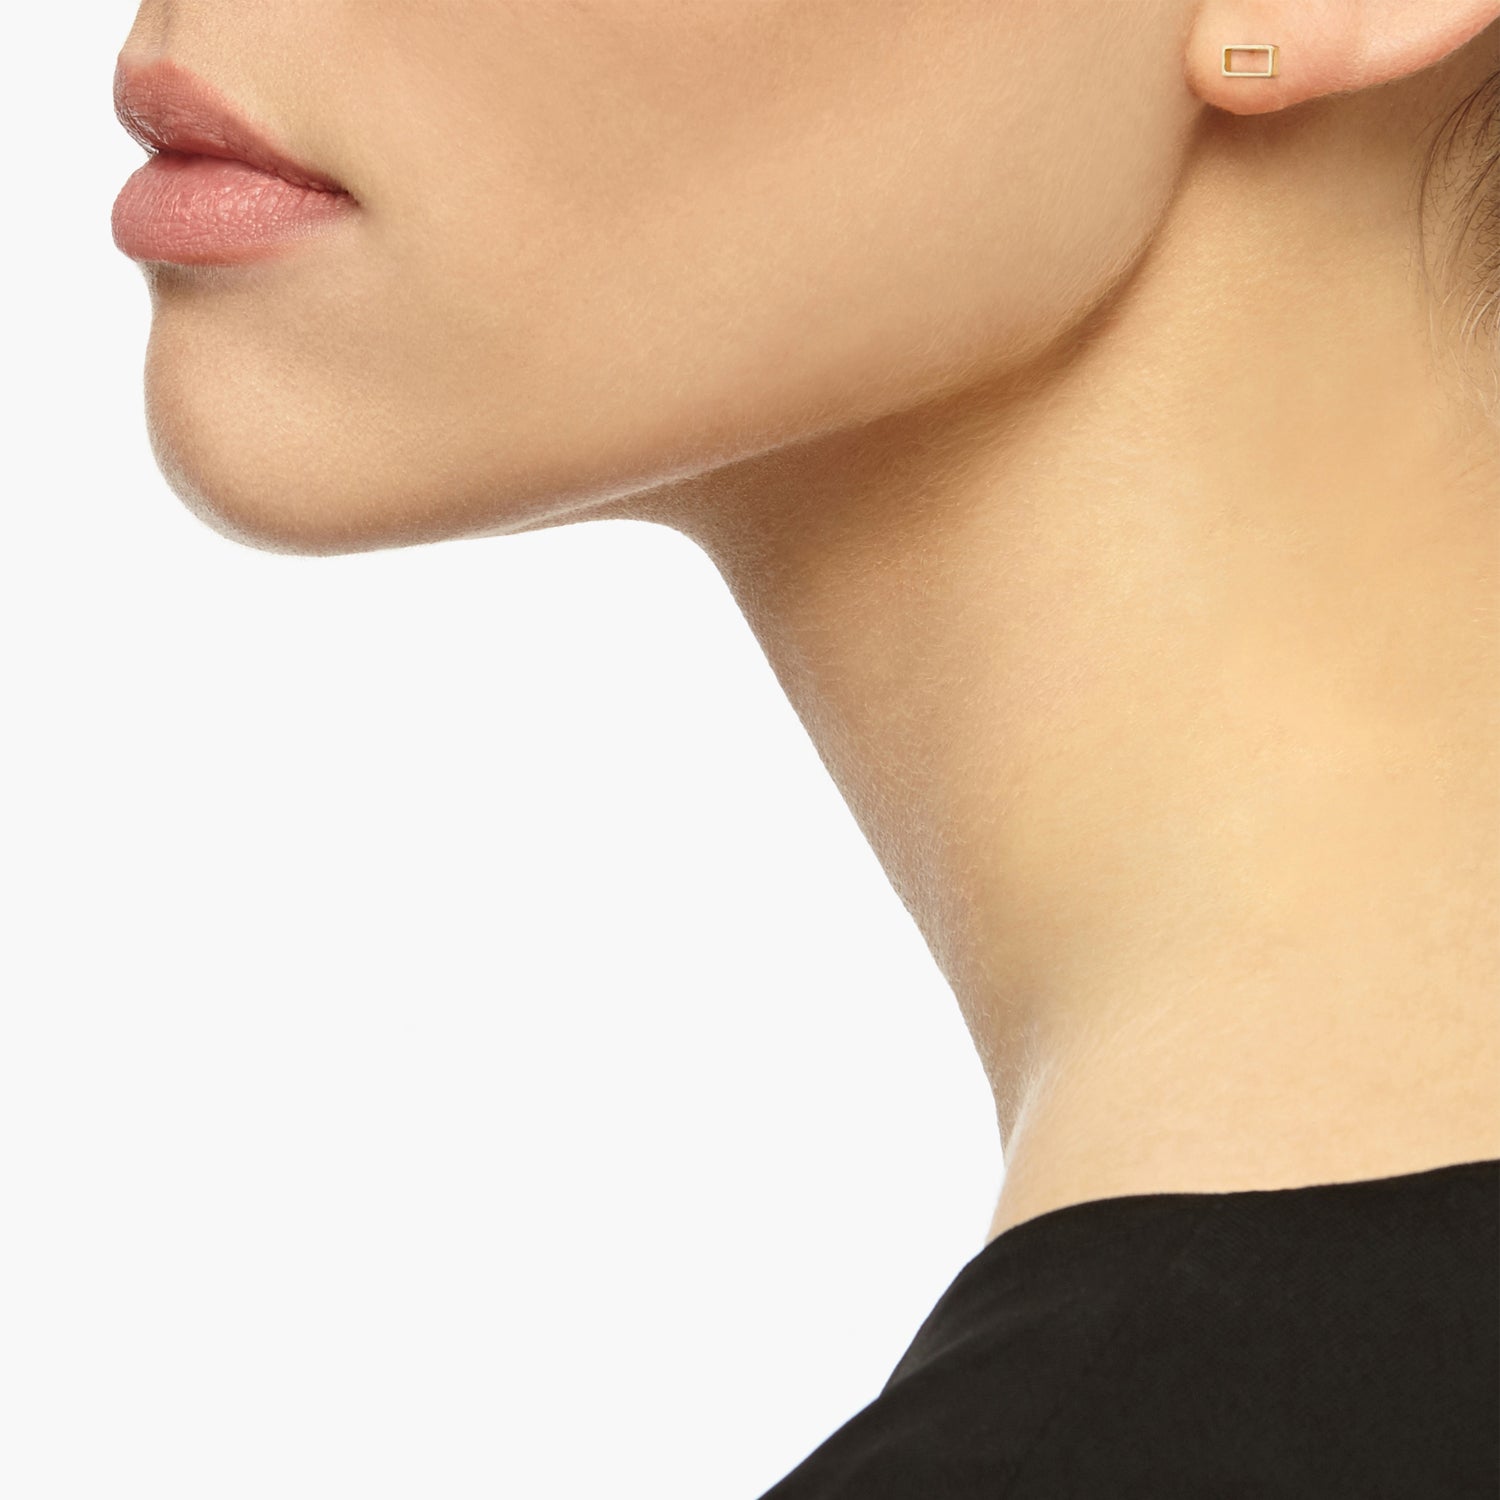 Horizontal Oblong Stud Earrings - Gold - Myia Bonner Jewellery